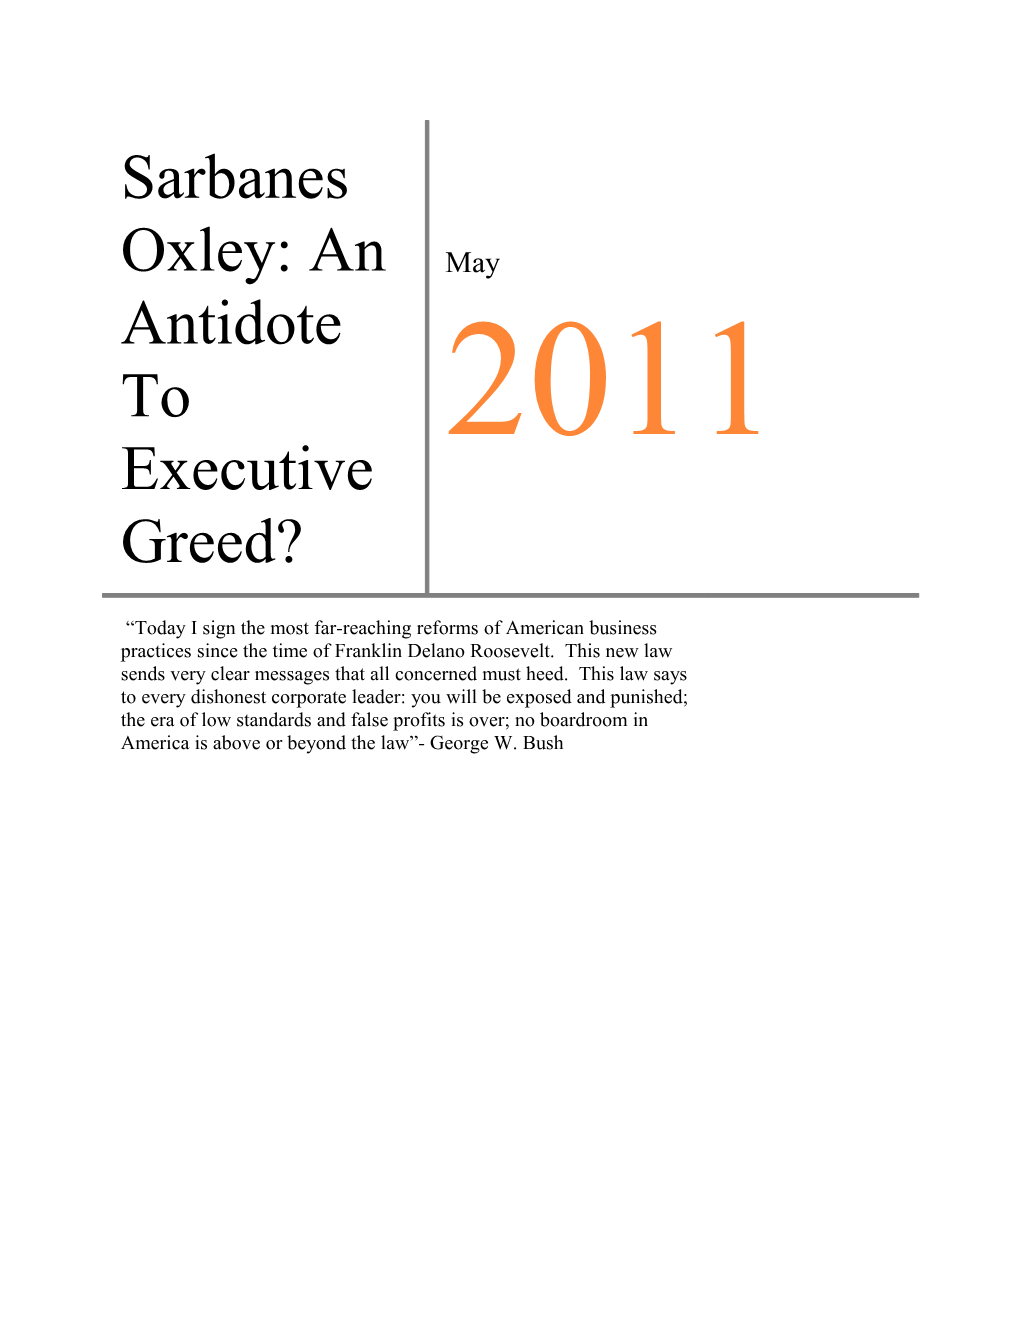 Sarbanes Oxley: an Antidote to Executive Greed?